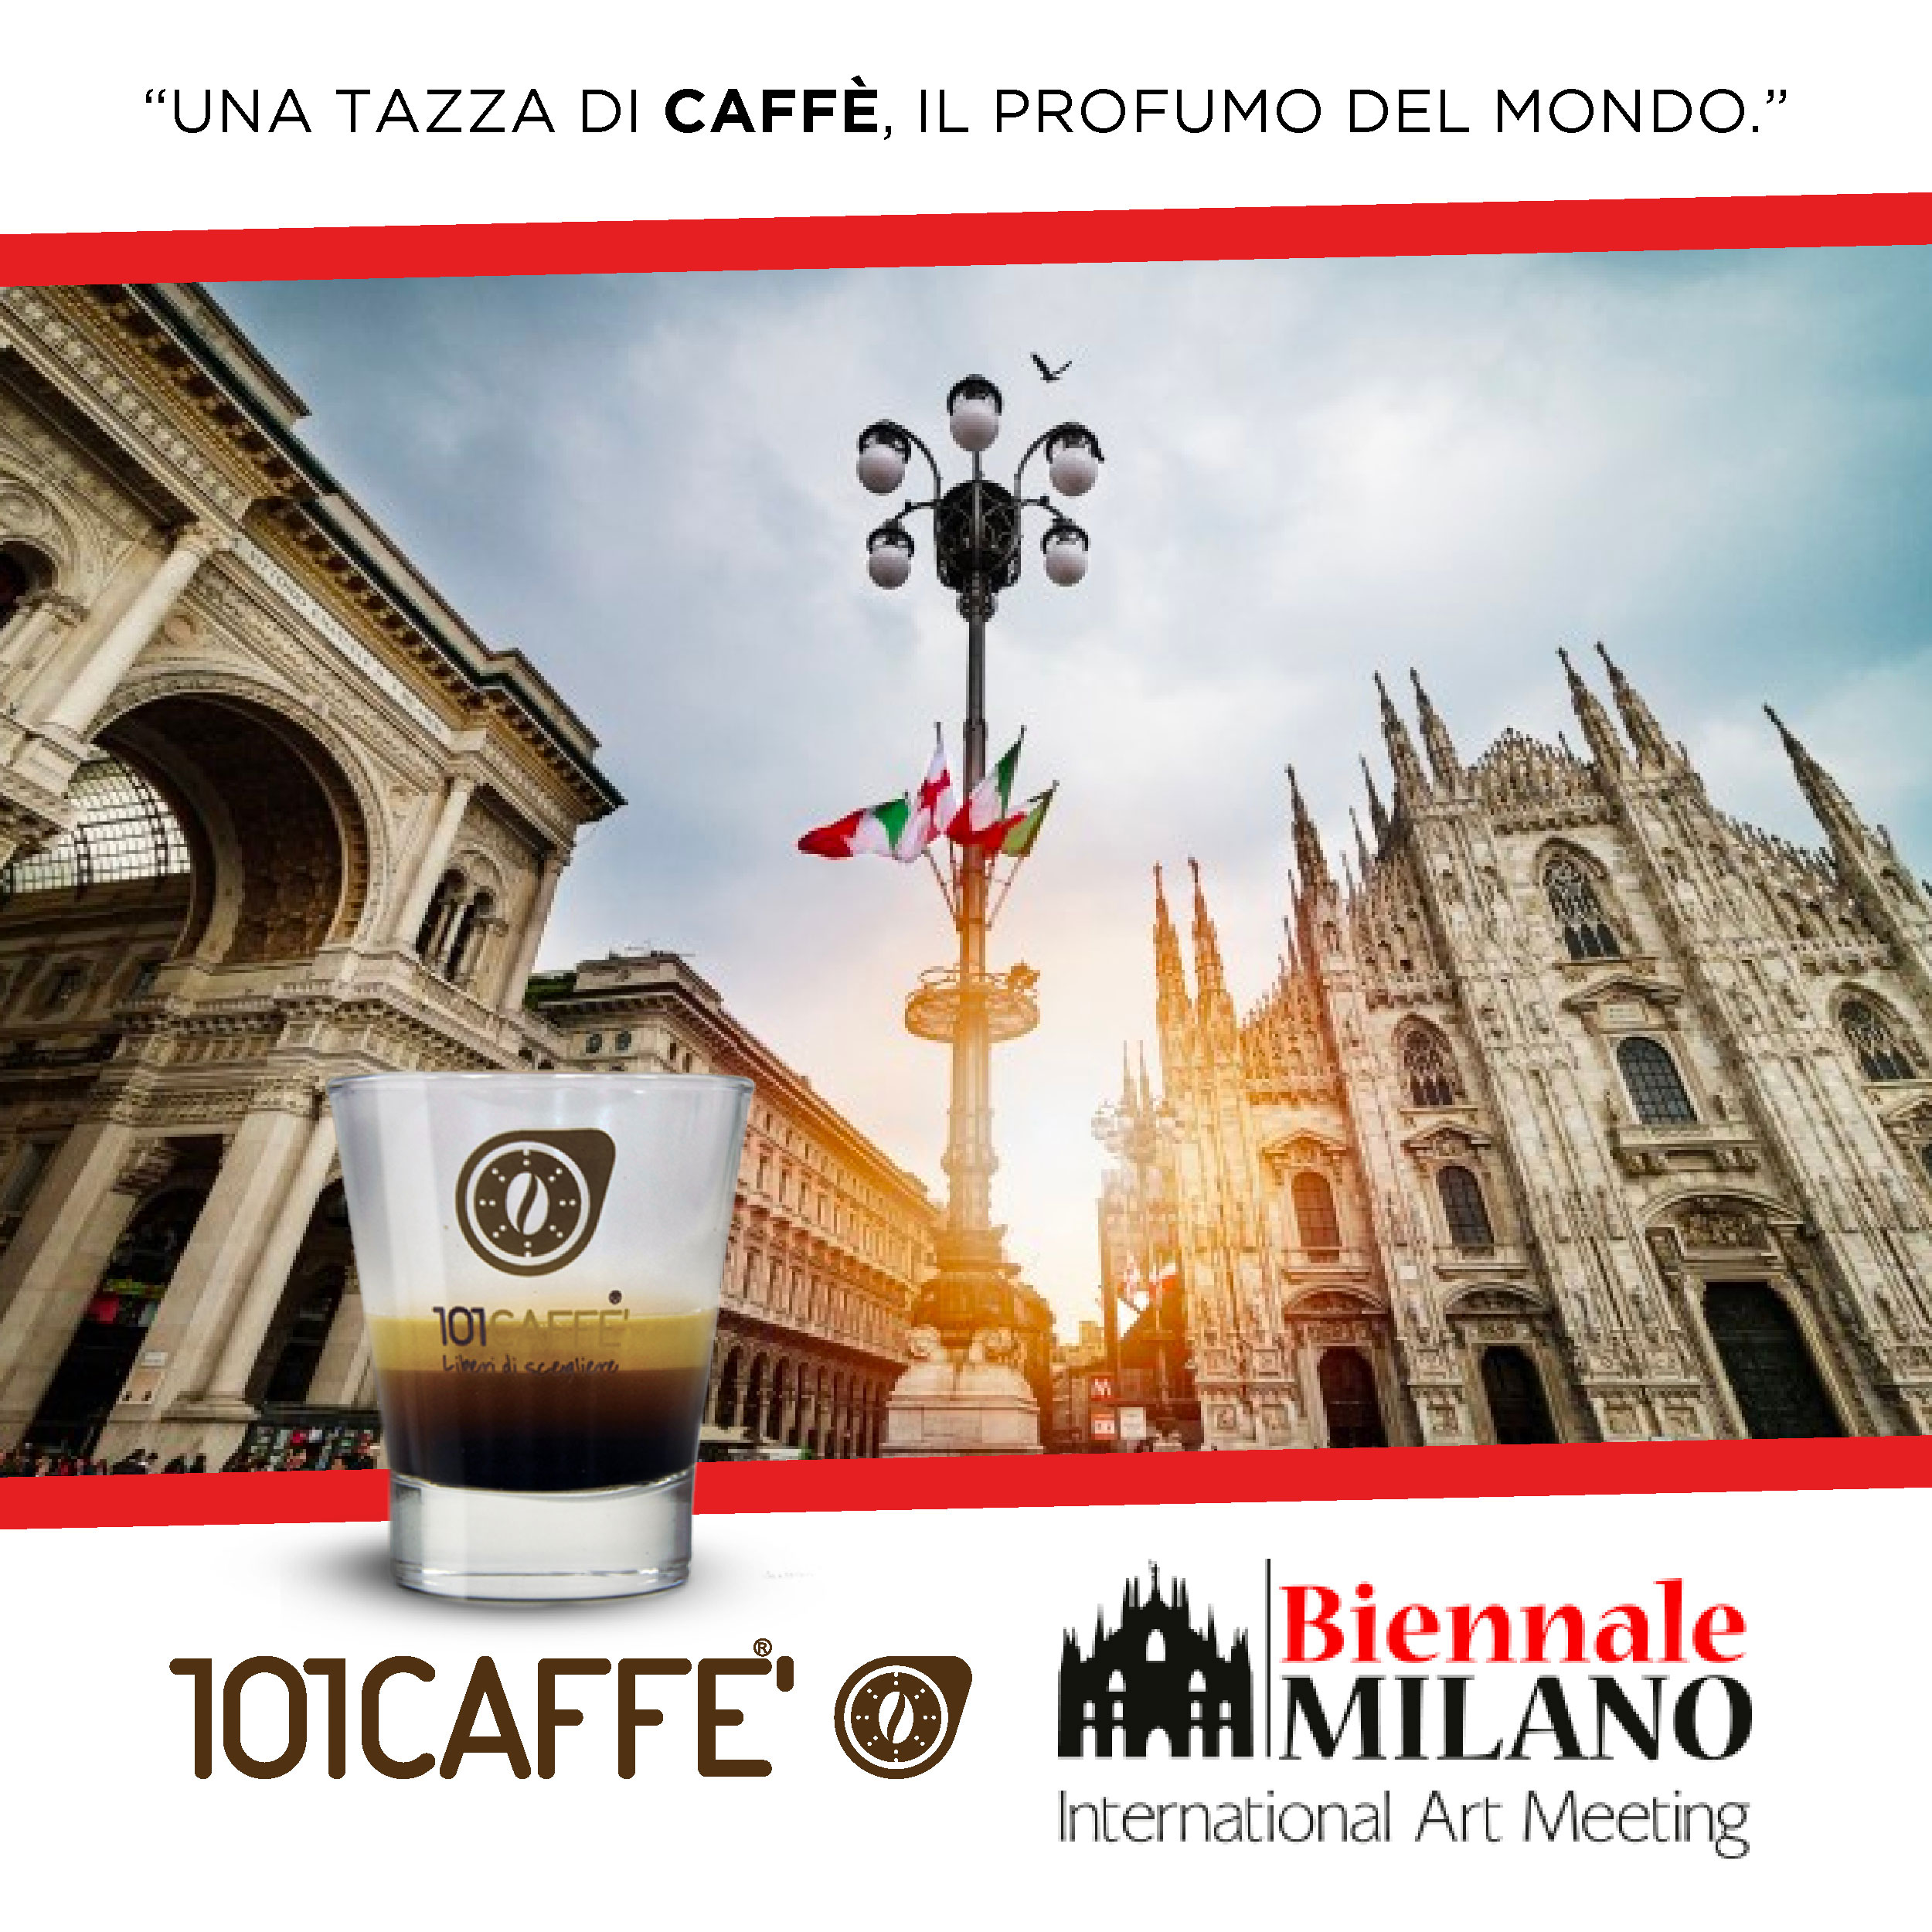 101CAFFE’ A BIENNALE MILANO - INTERNATIONAL ART MEETING “L’arte incontra la cultura del caffè”